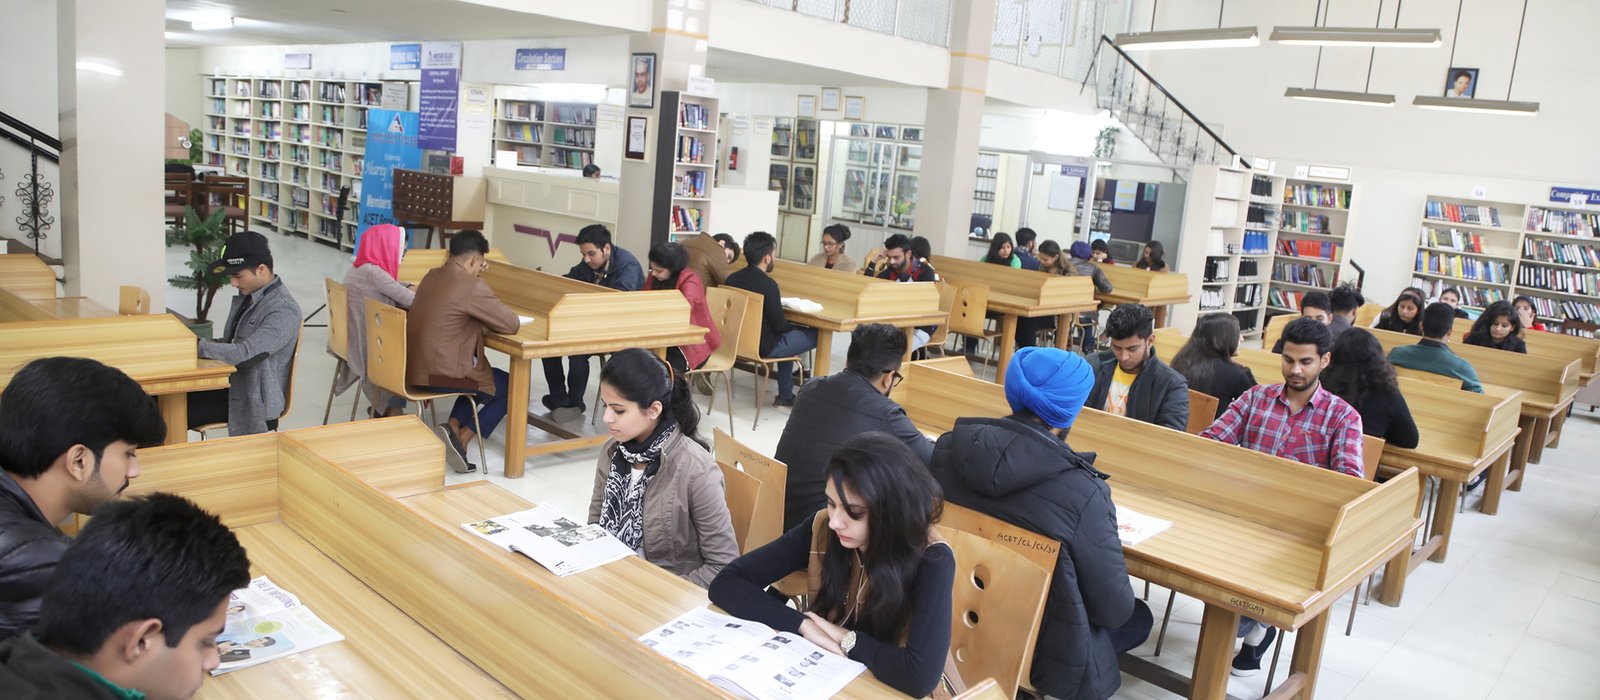 Library|agc amritsar